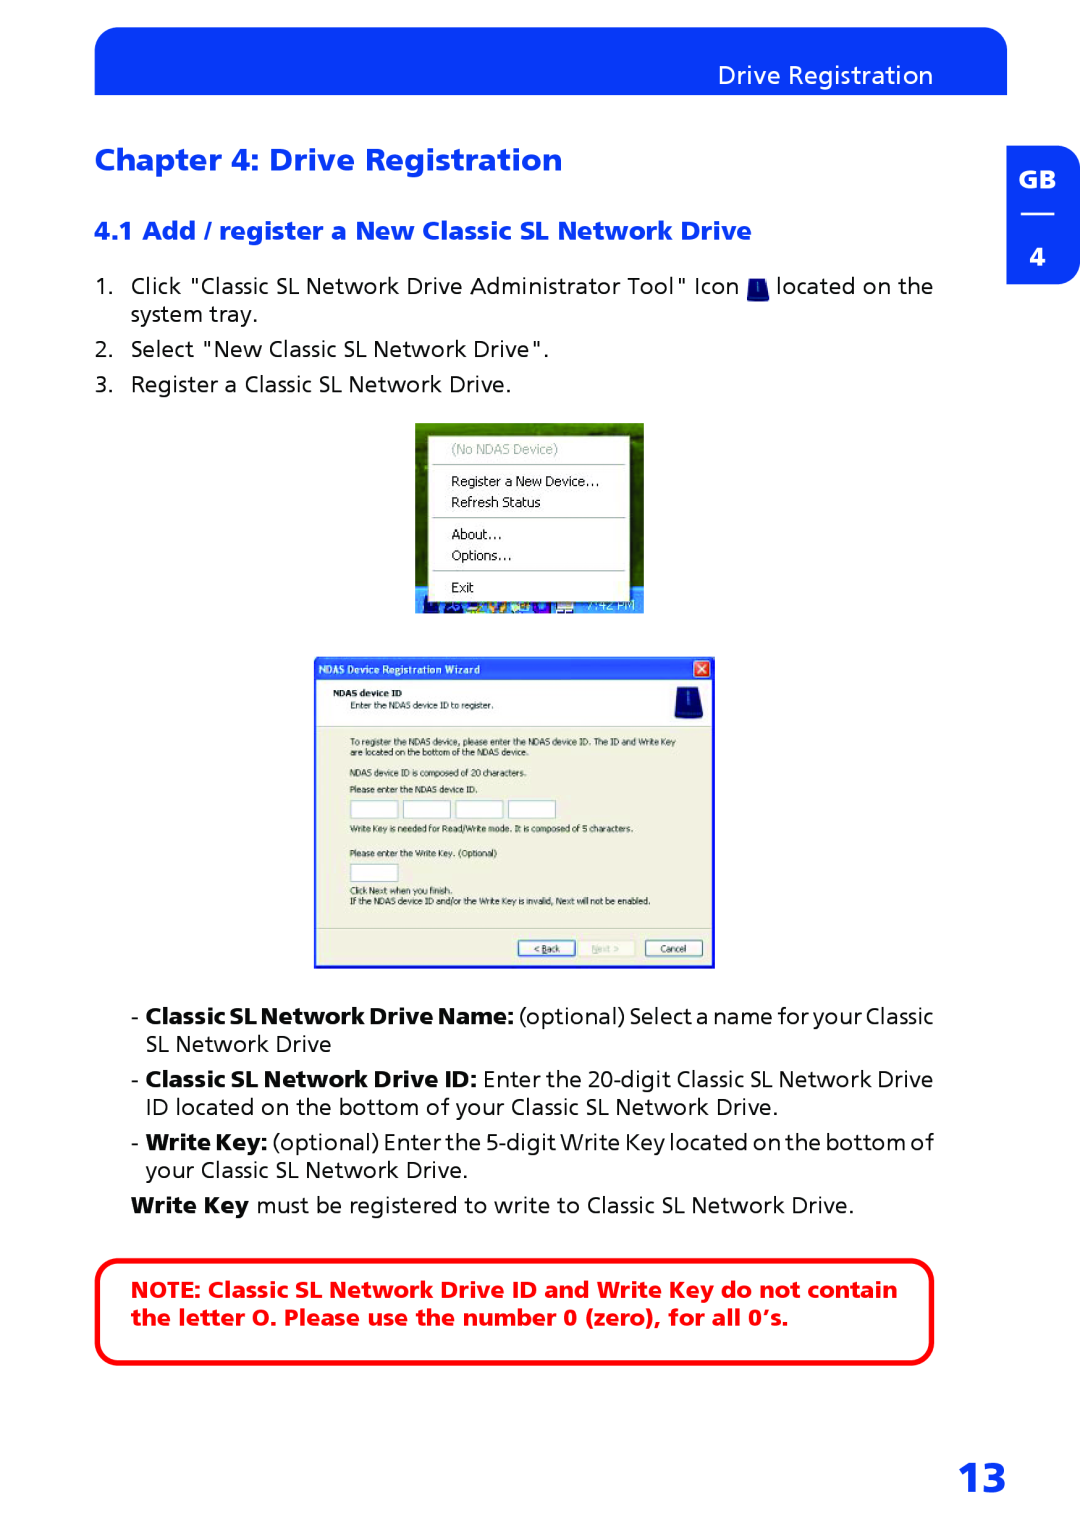 Freecom Technologies Network hard drive manual Drive Registration, Add / register a New Classic SL Network Drive 